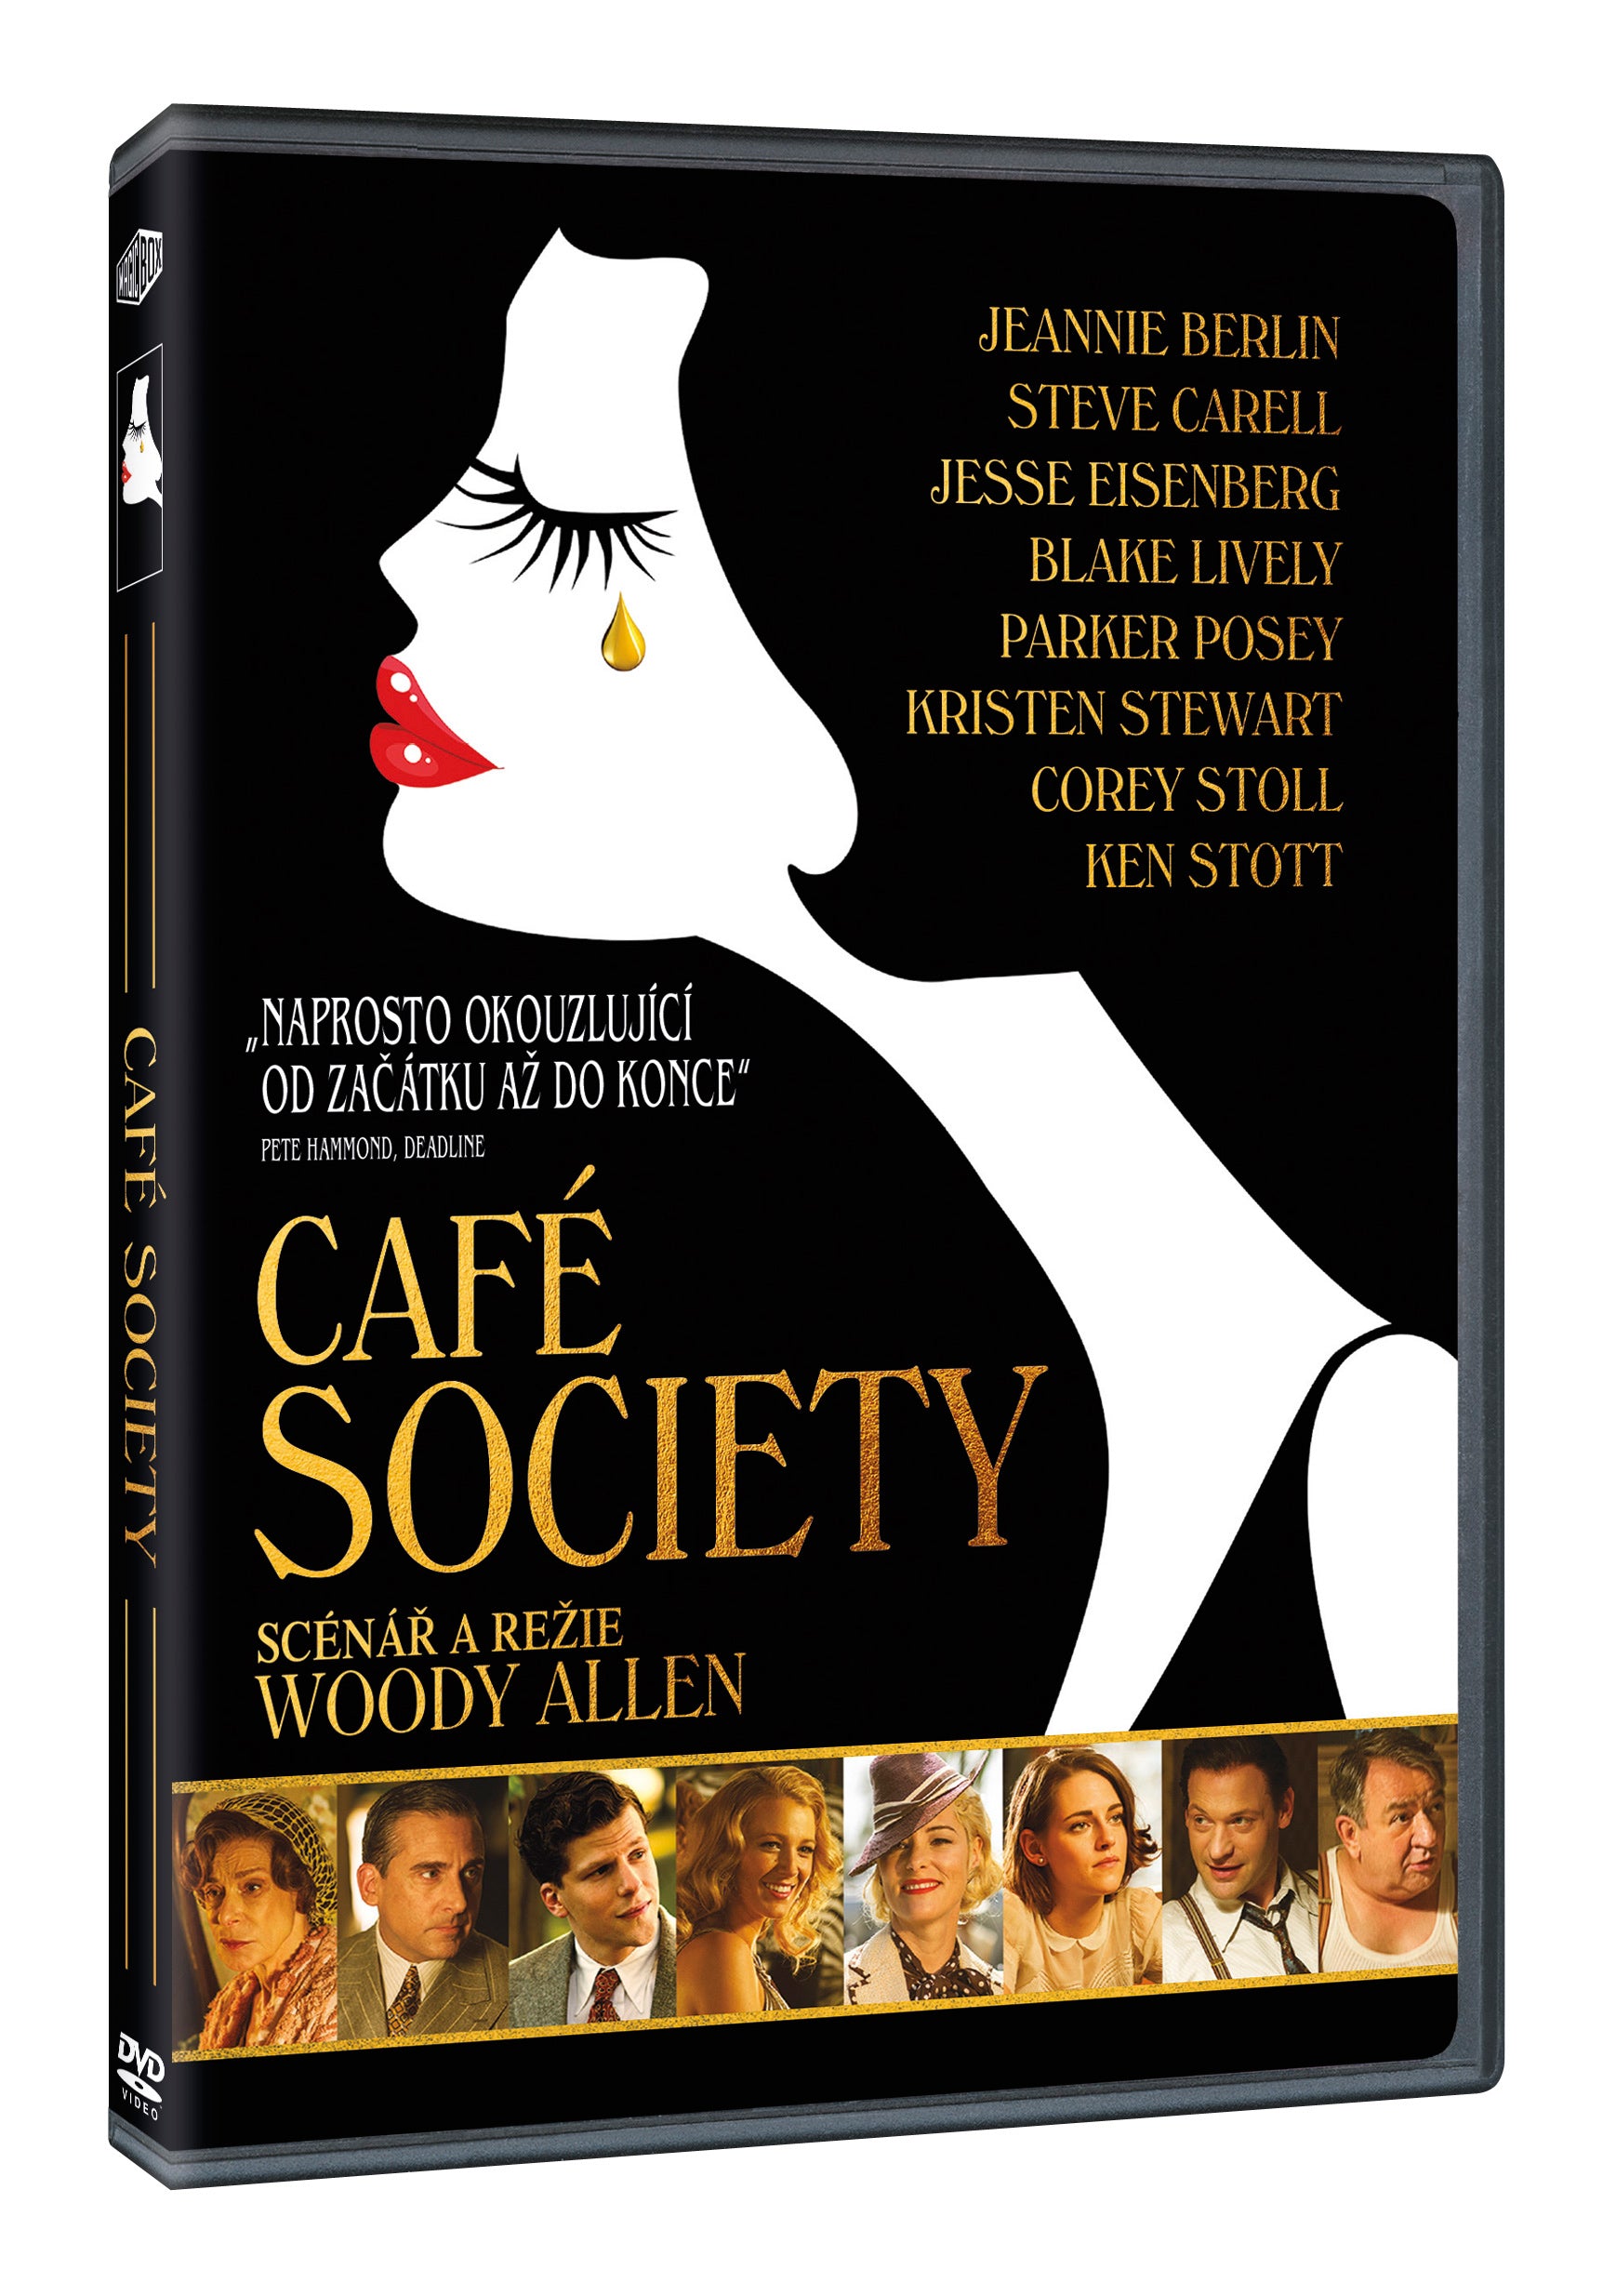 Cafe Society DVD / Cafe Society